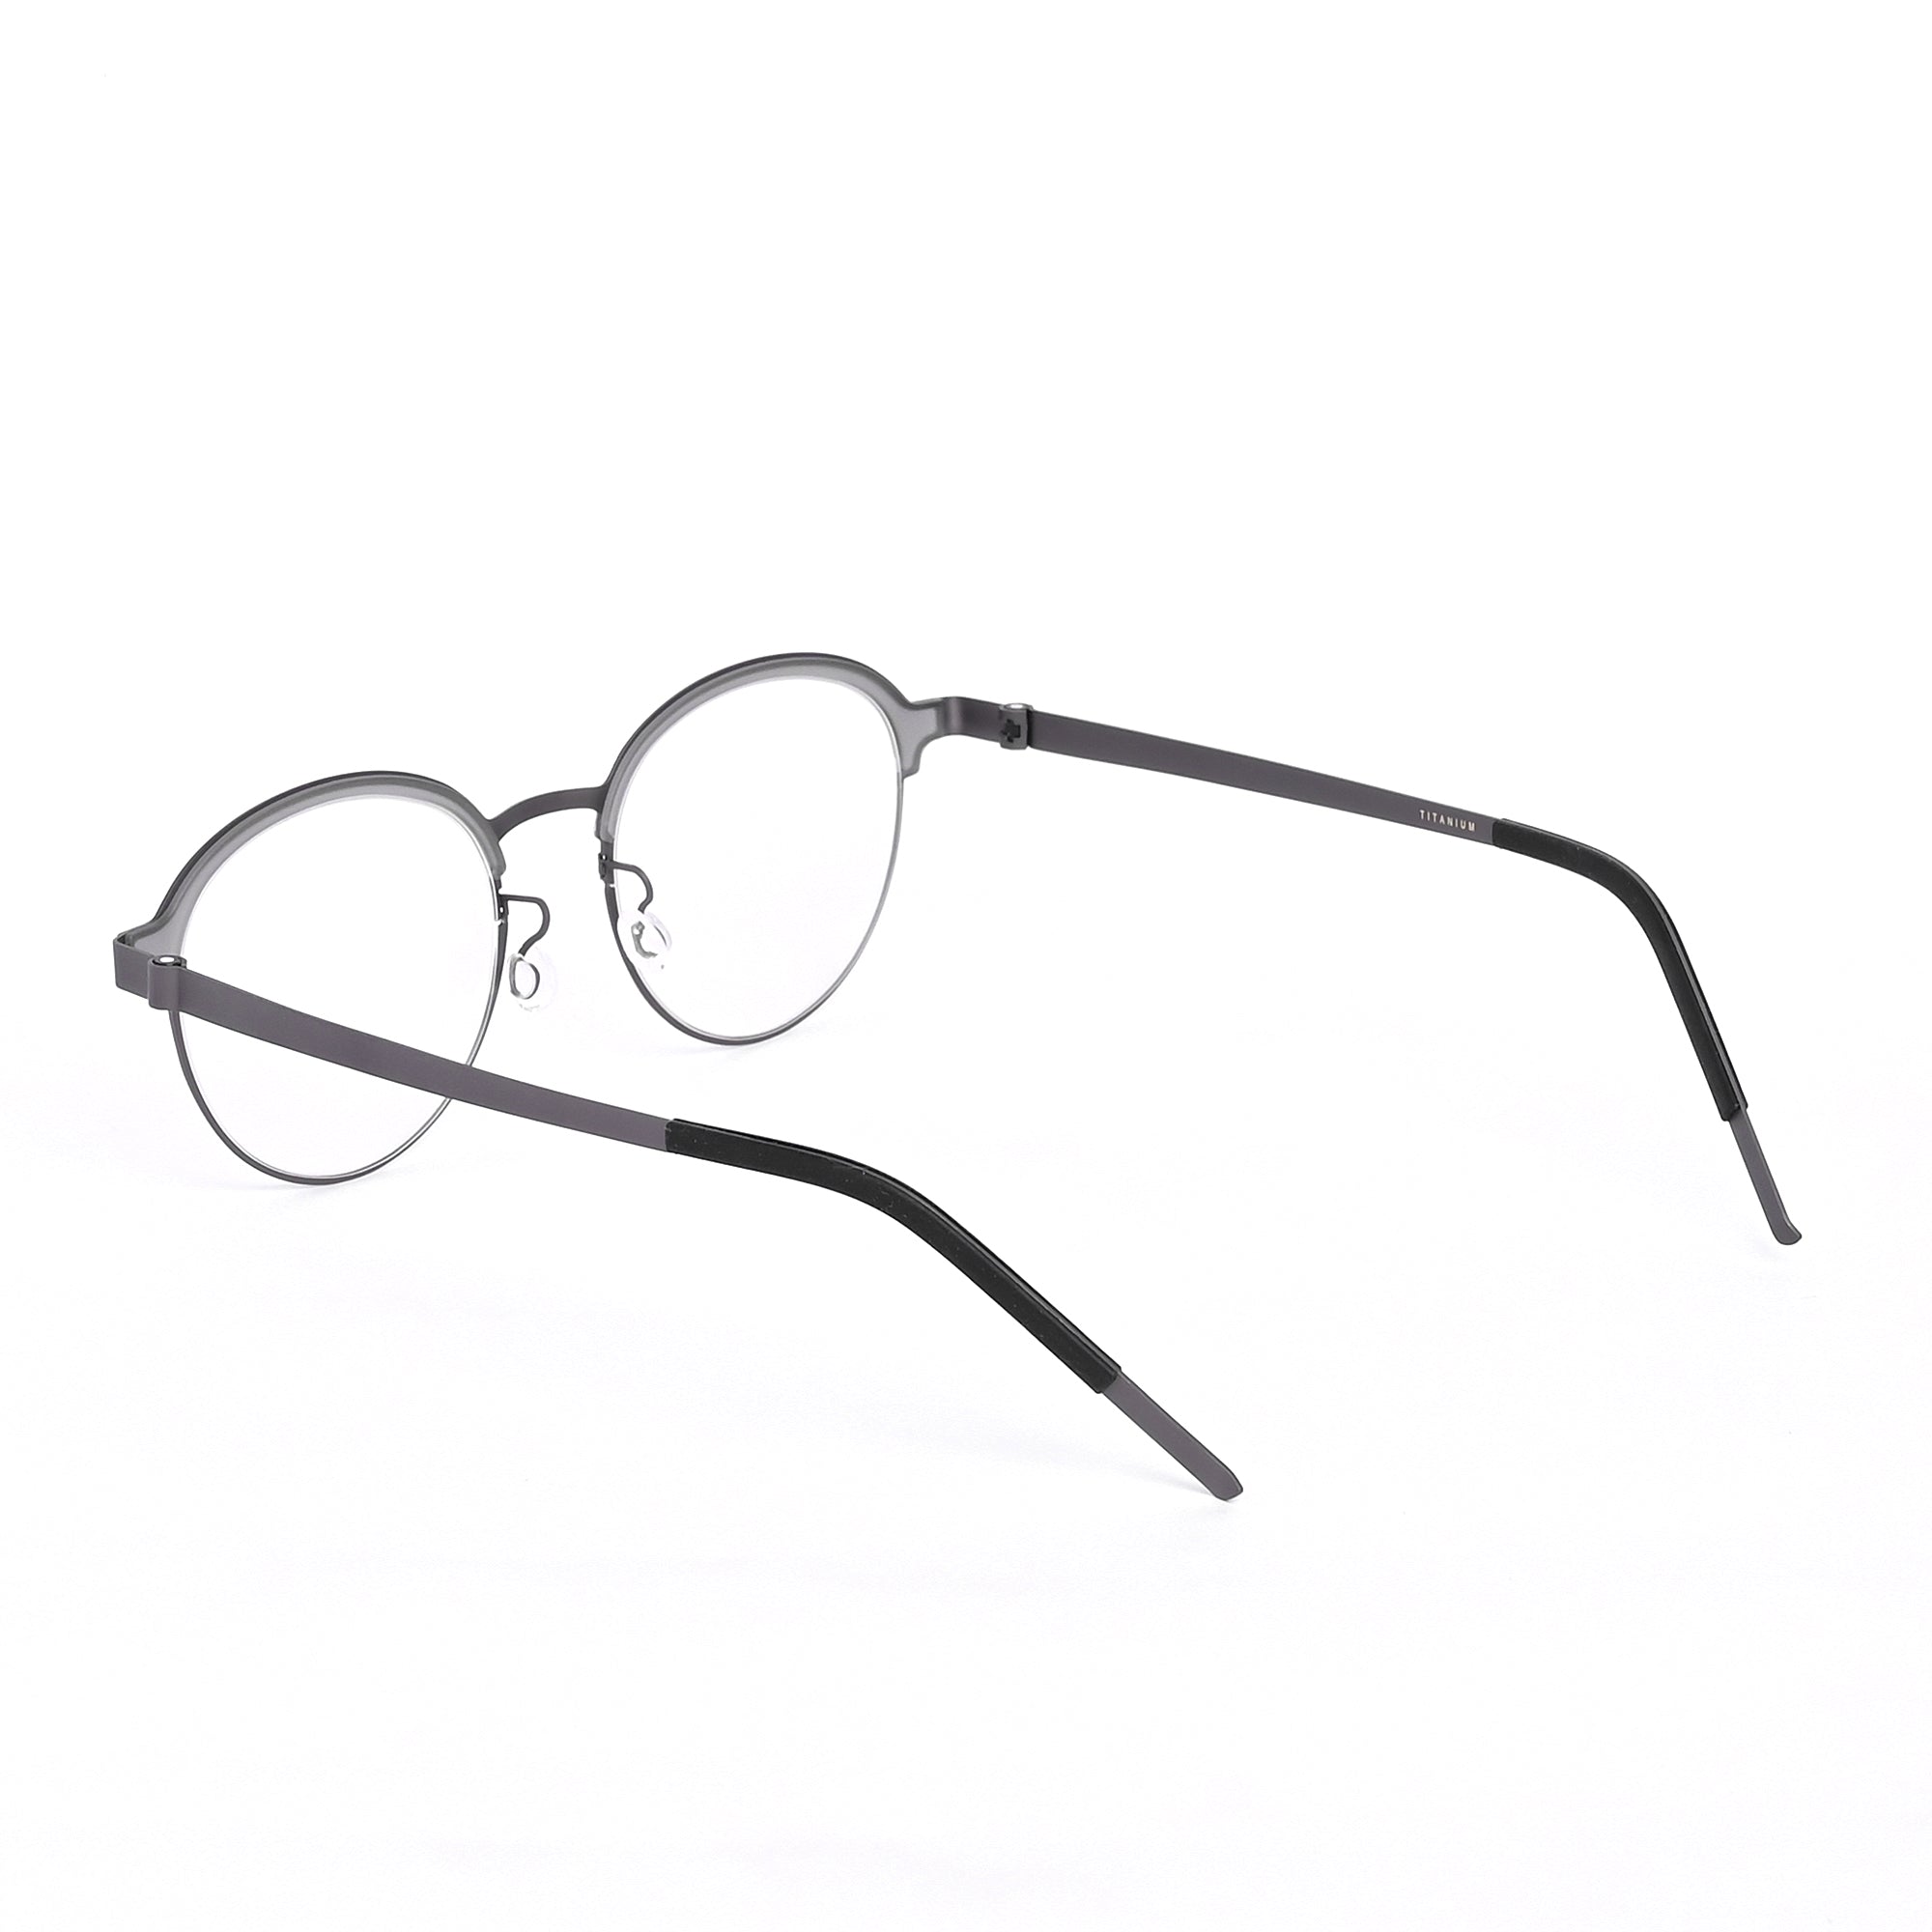 Grey Round Keymount Computer Eyeglasses - LG-004 GRY